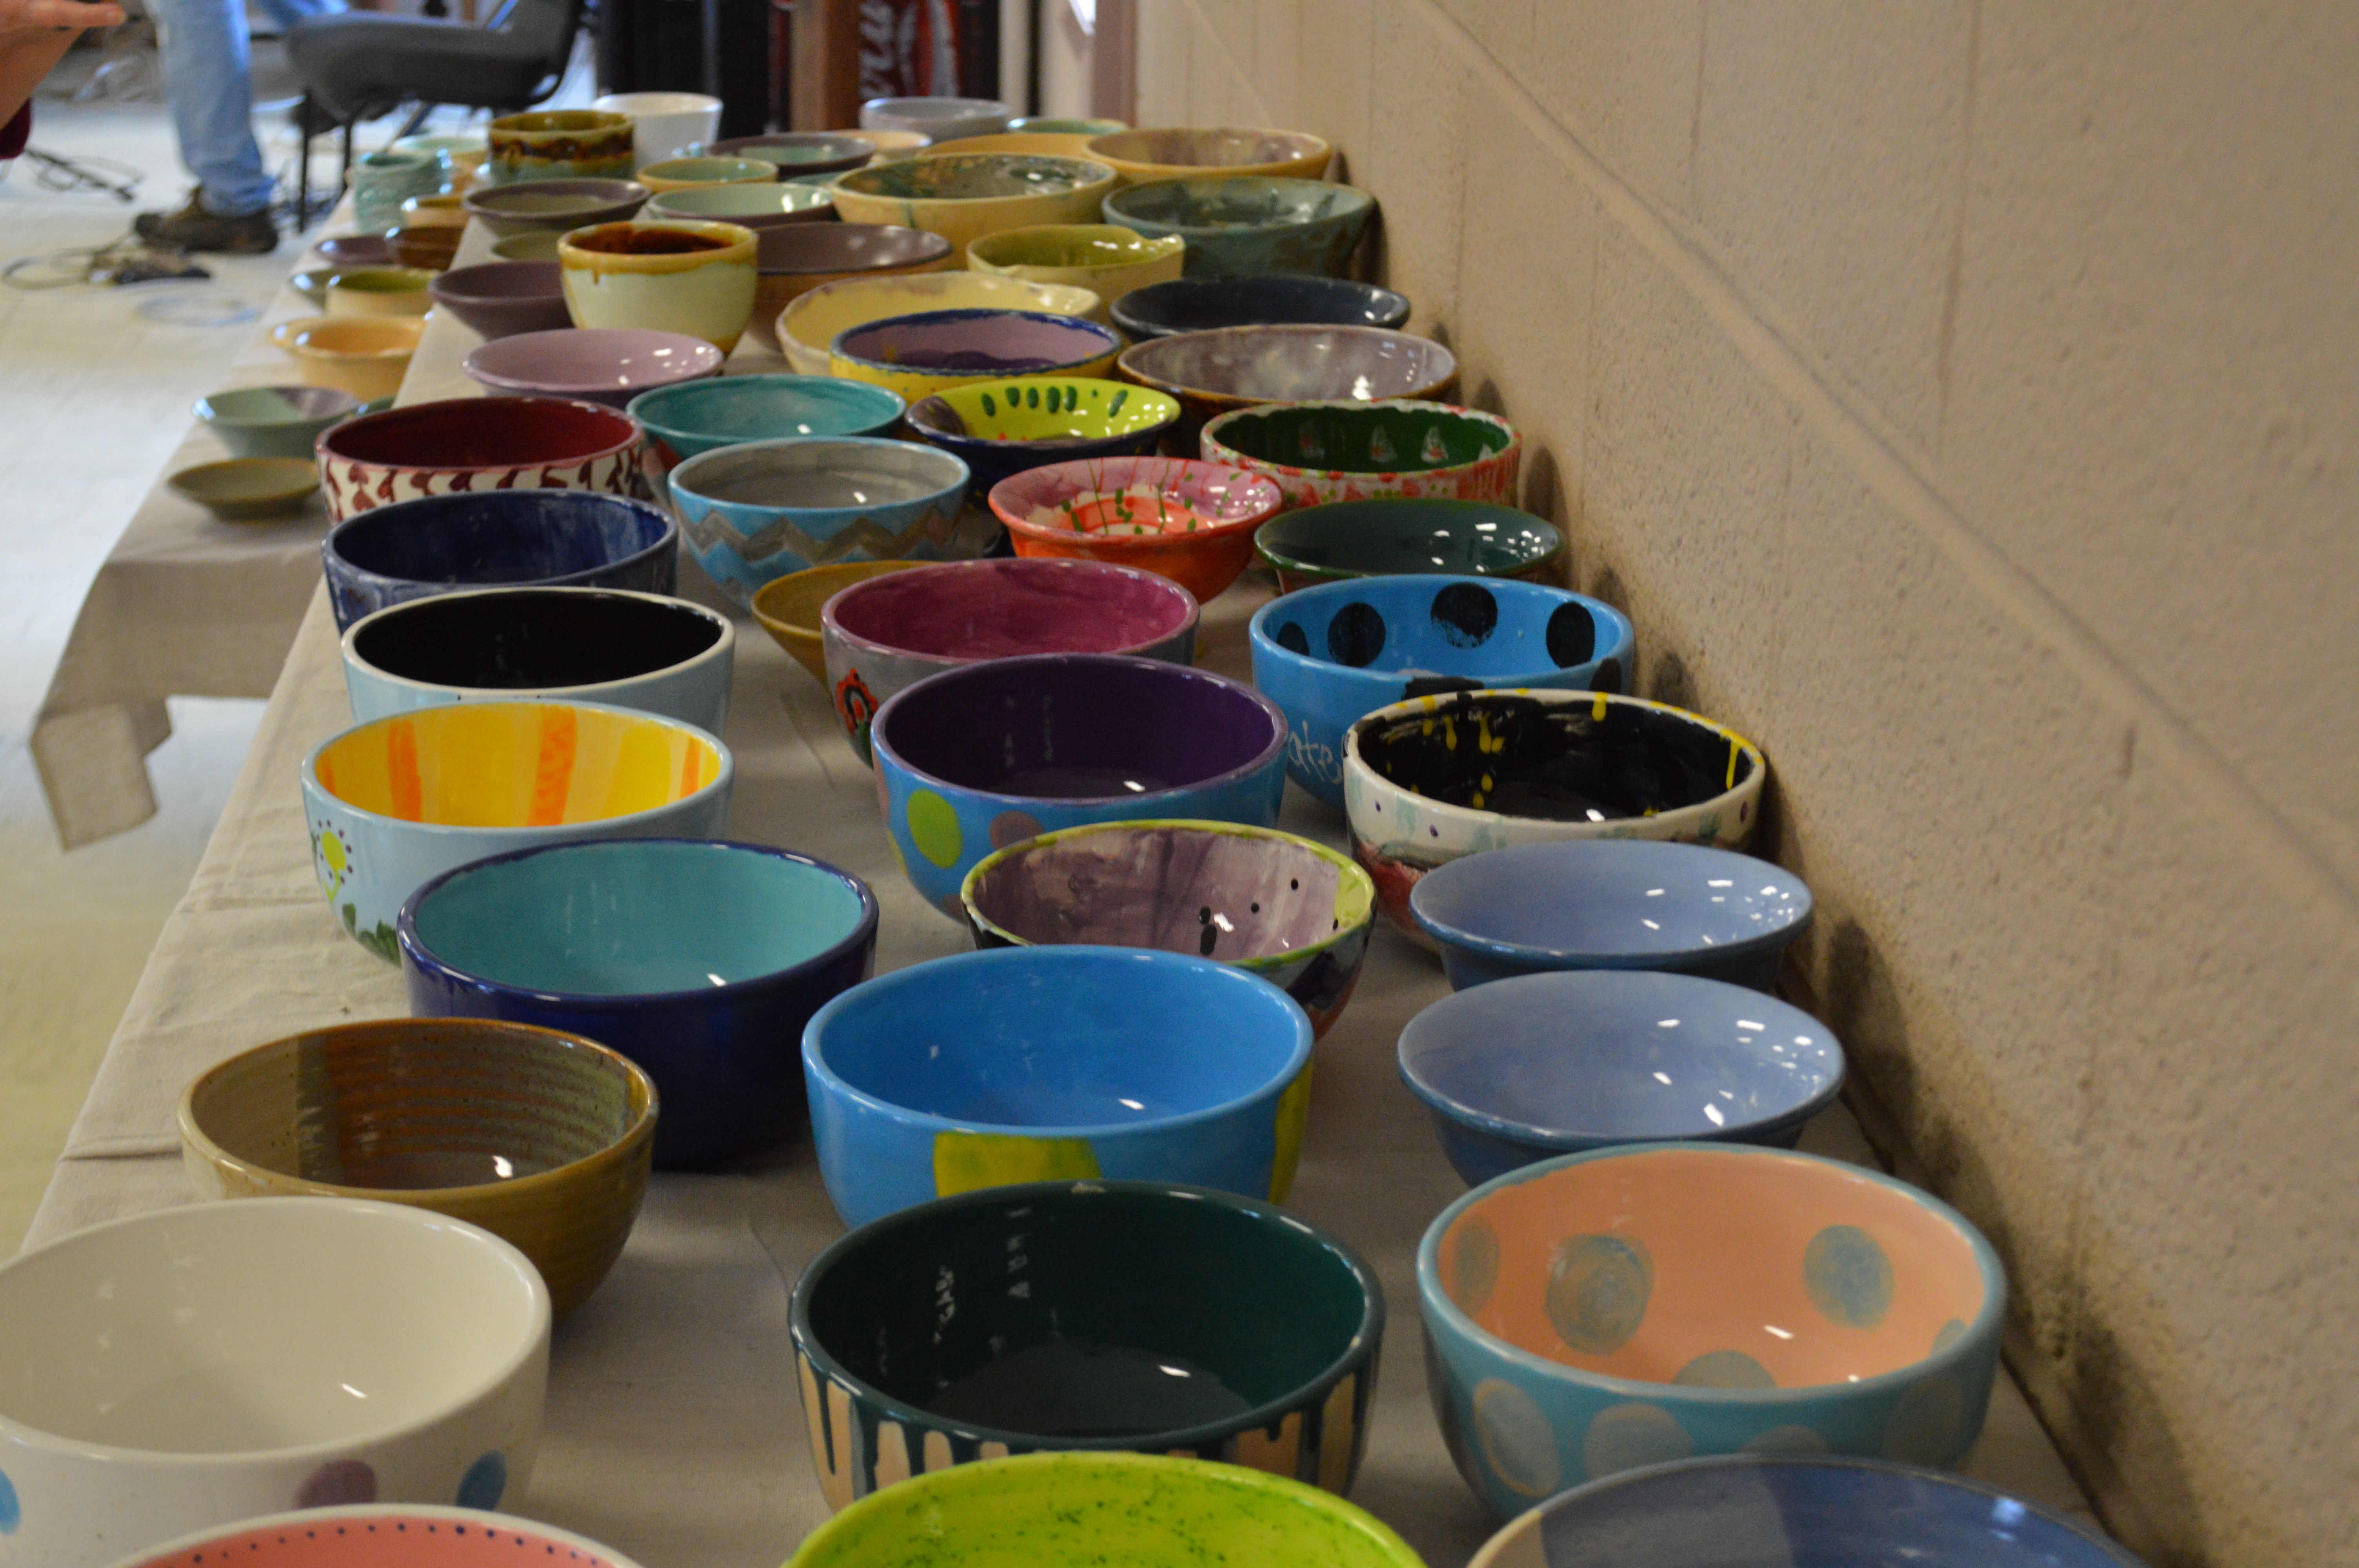 Church, UA Art Department Team to Host “Empty Bowls”